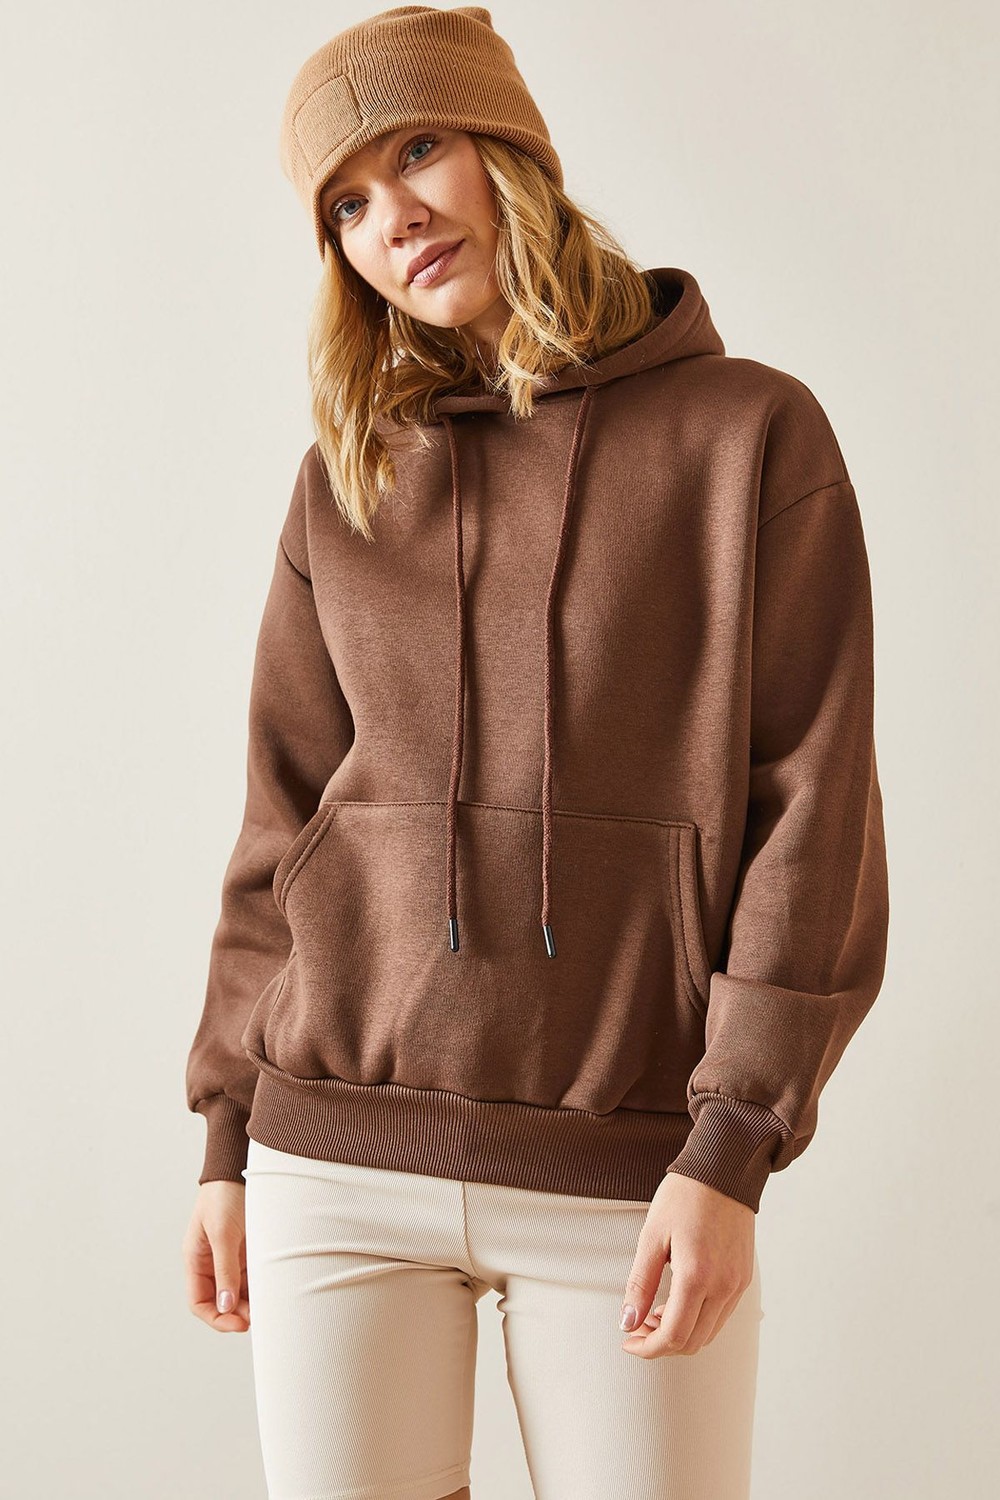 XHAN Brown Kangaroo Pocket & Hooded Sweatshirt